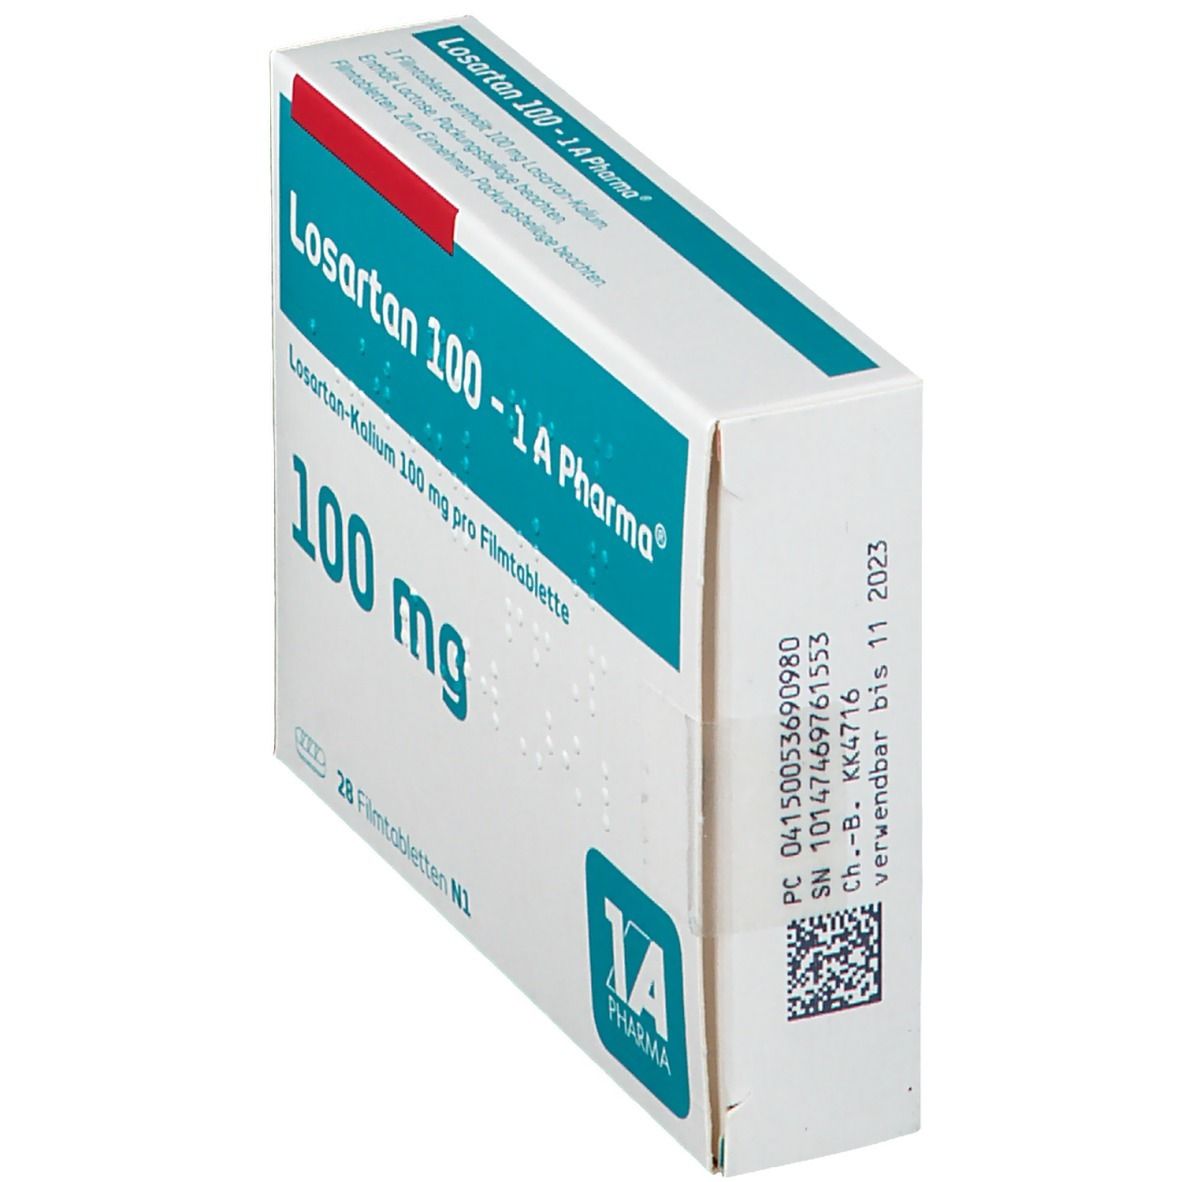 Losartan 100 - 1 A Pharma®